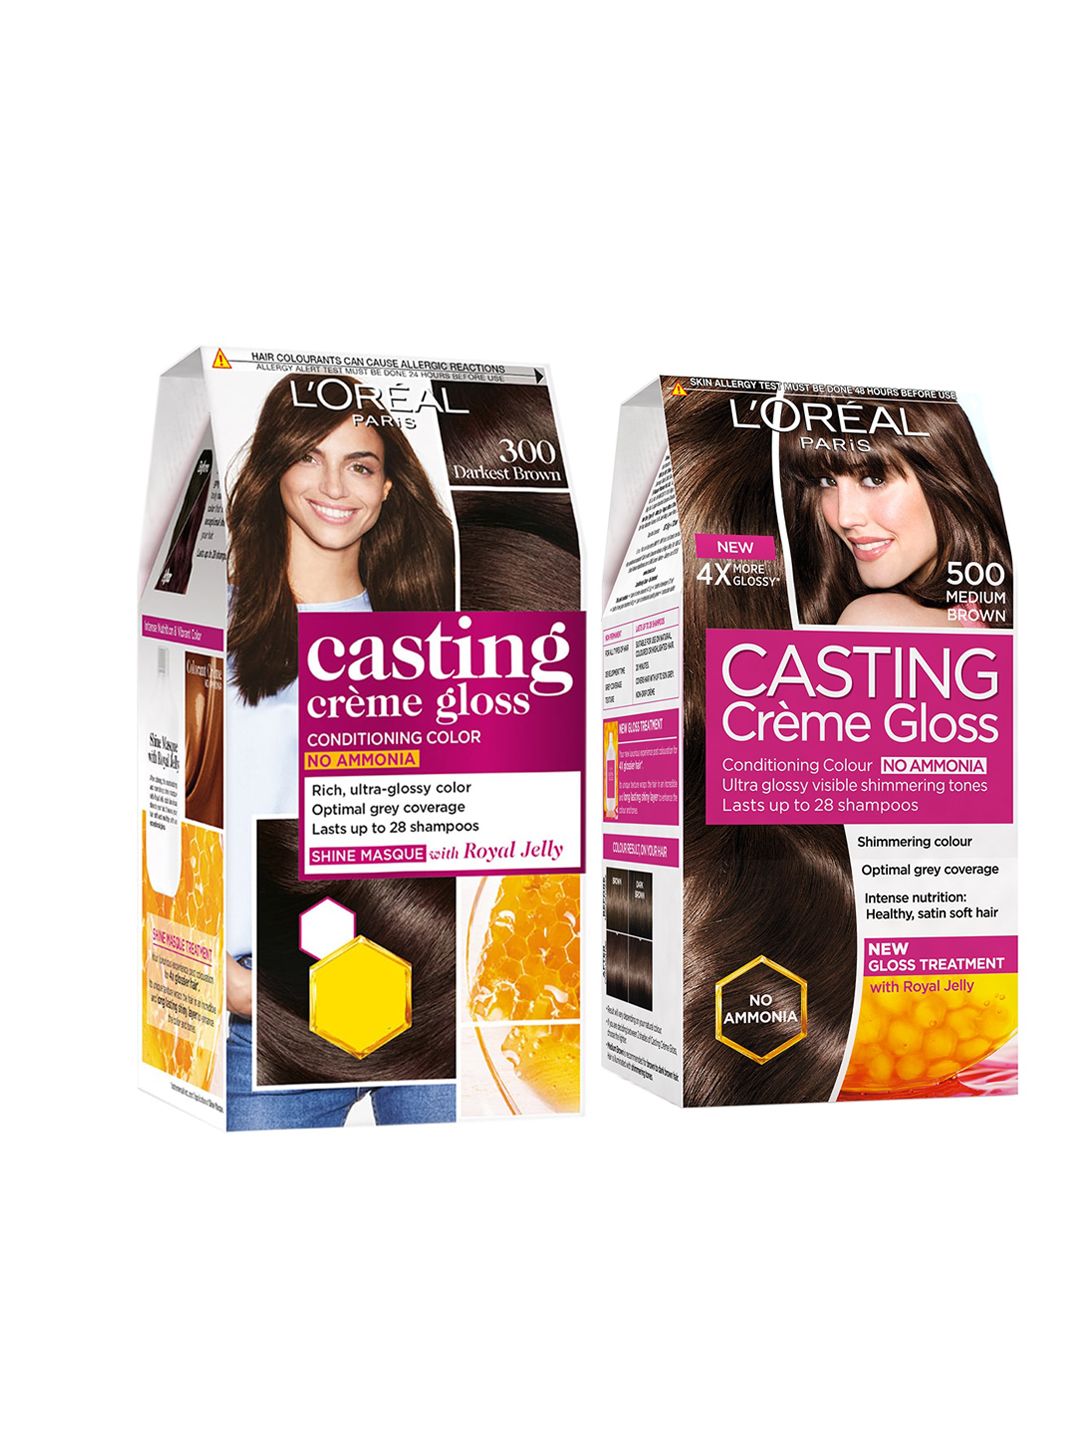 LOreal Paris Set Of 2 Women Casting Creme Gloss Hair Color - Darkest Brown & Medium Brown Price in India